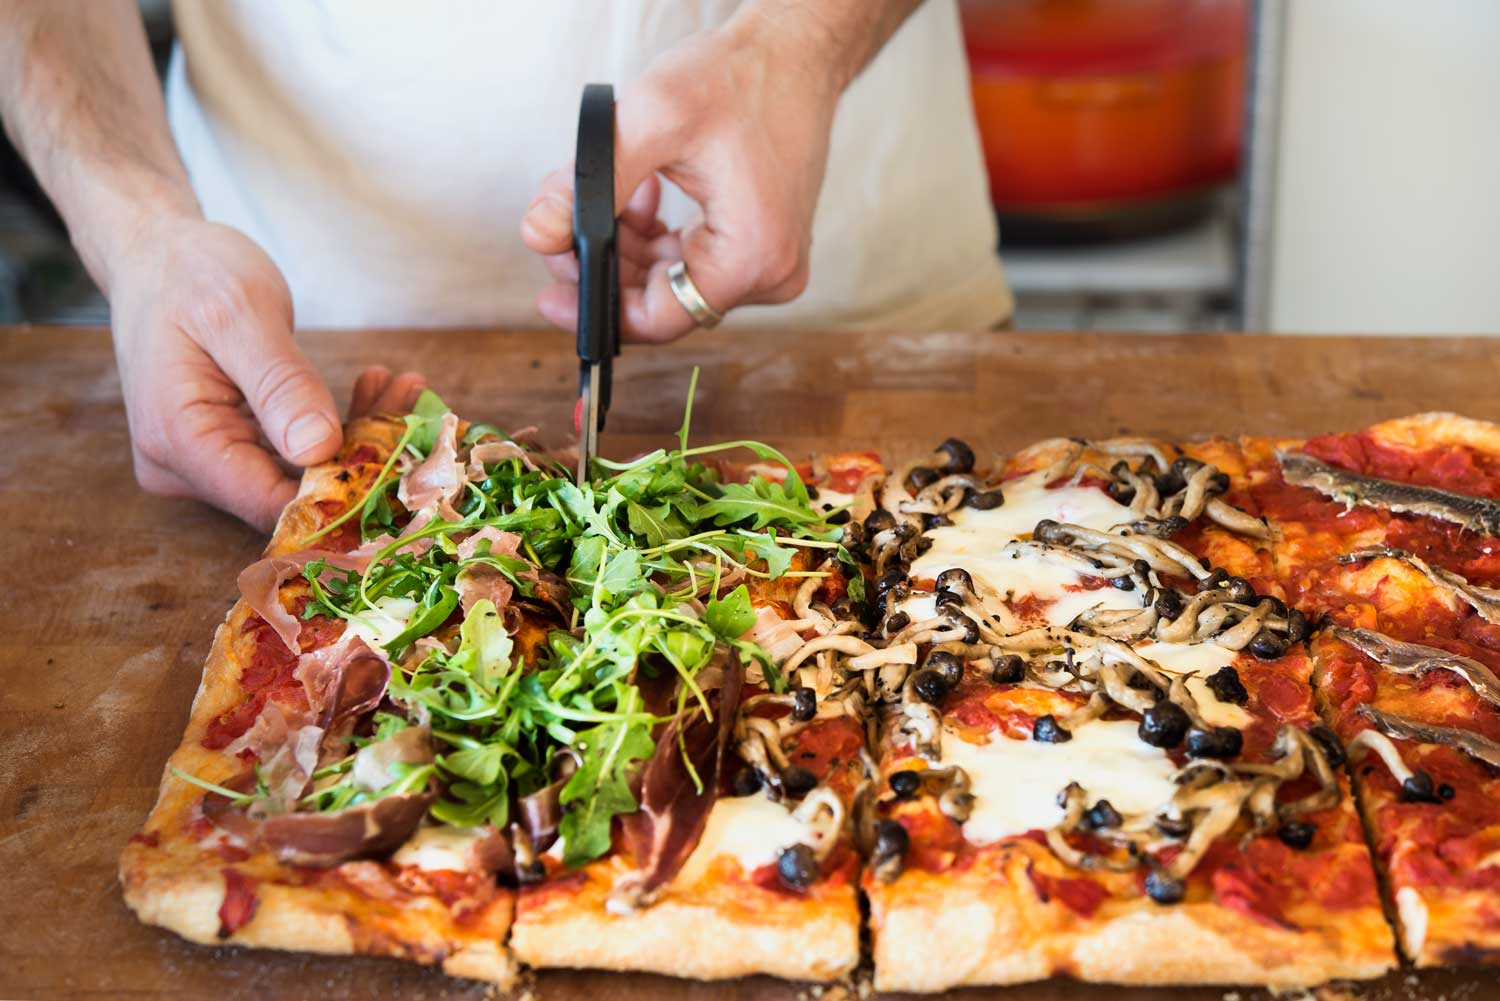 A chef dividing a roman style pizza into squares